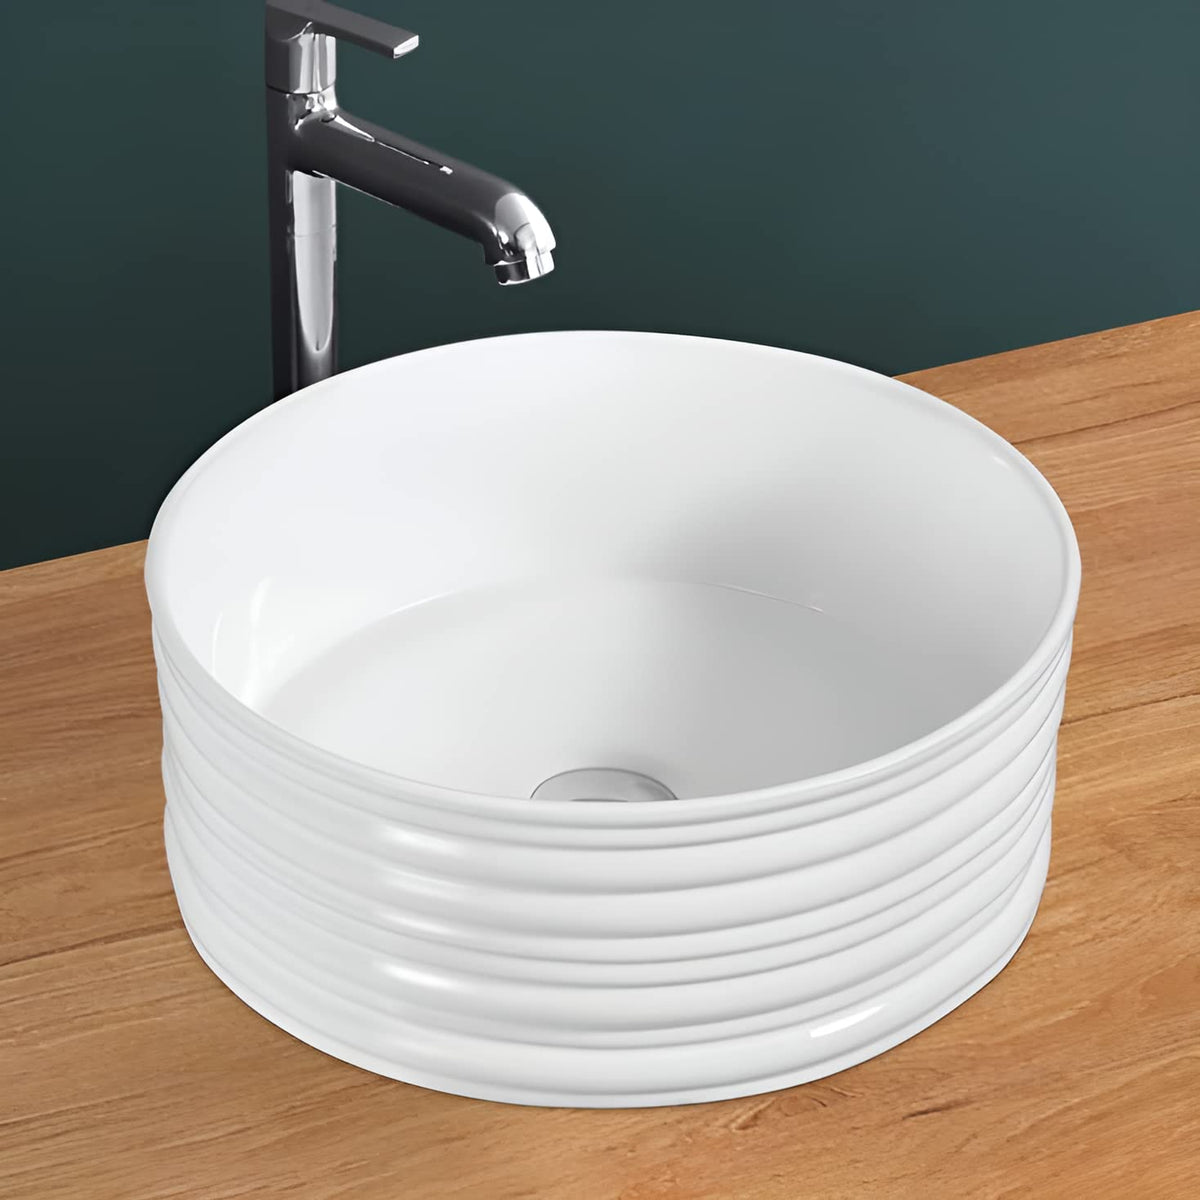 Plantex Platinium Ceramic Tabletop Round Wash Basin/Countertop Bathroom Sink (White, 16 x 16 x 6 Inch)